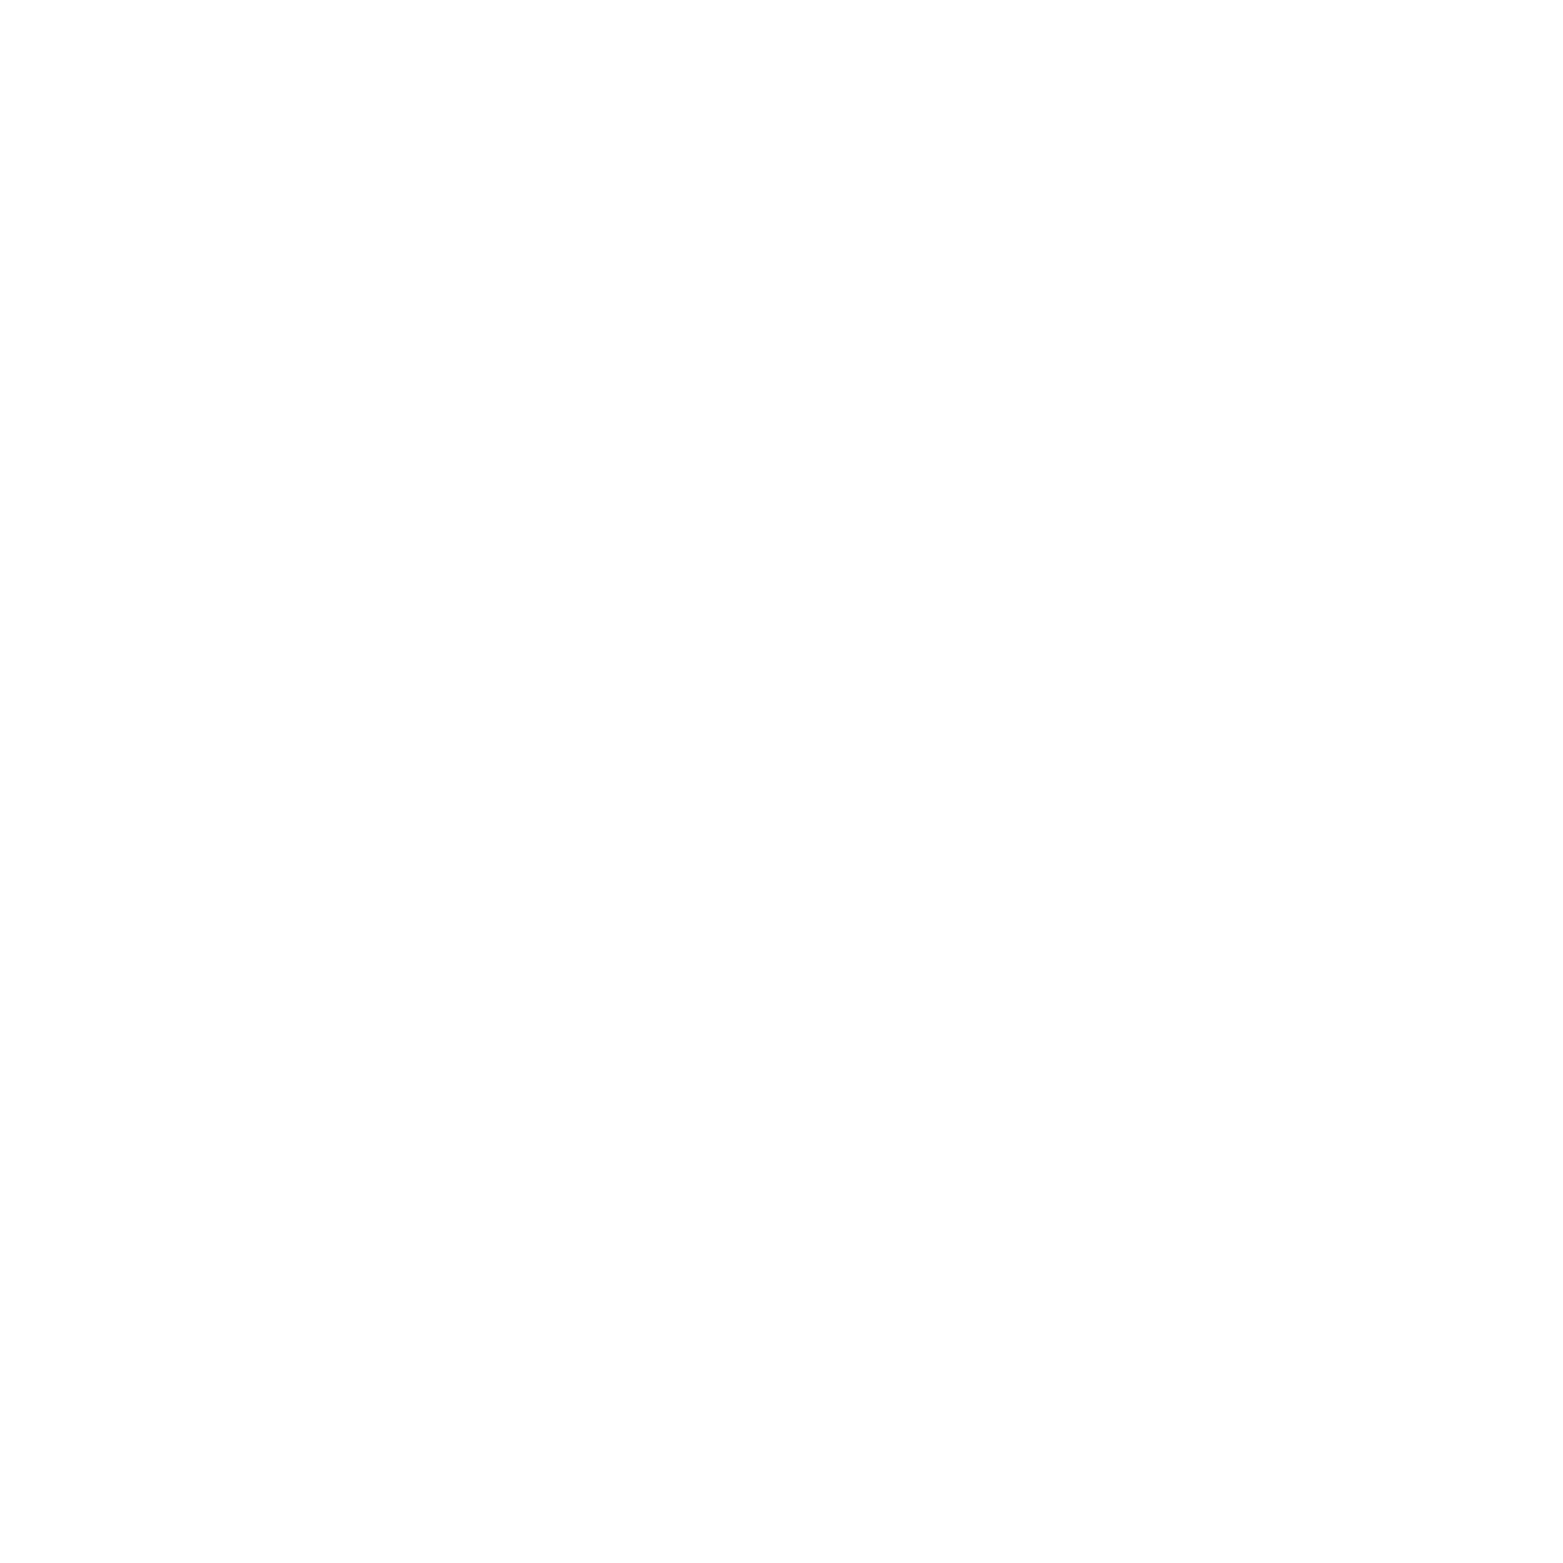 Lofti Technologies